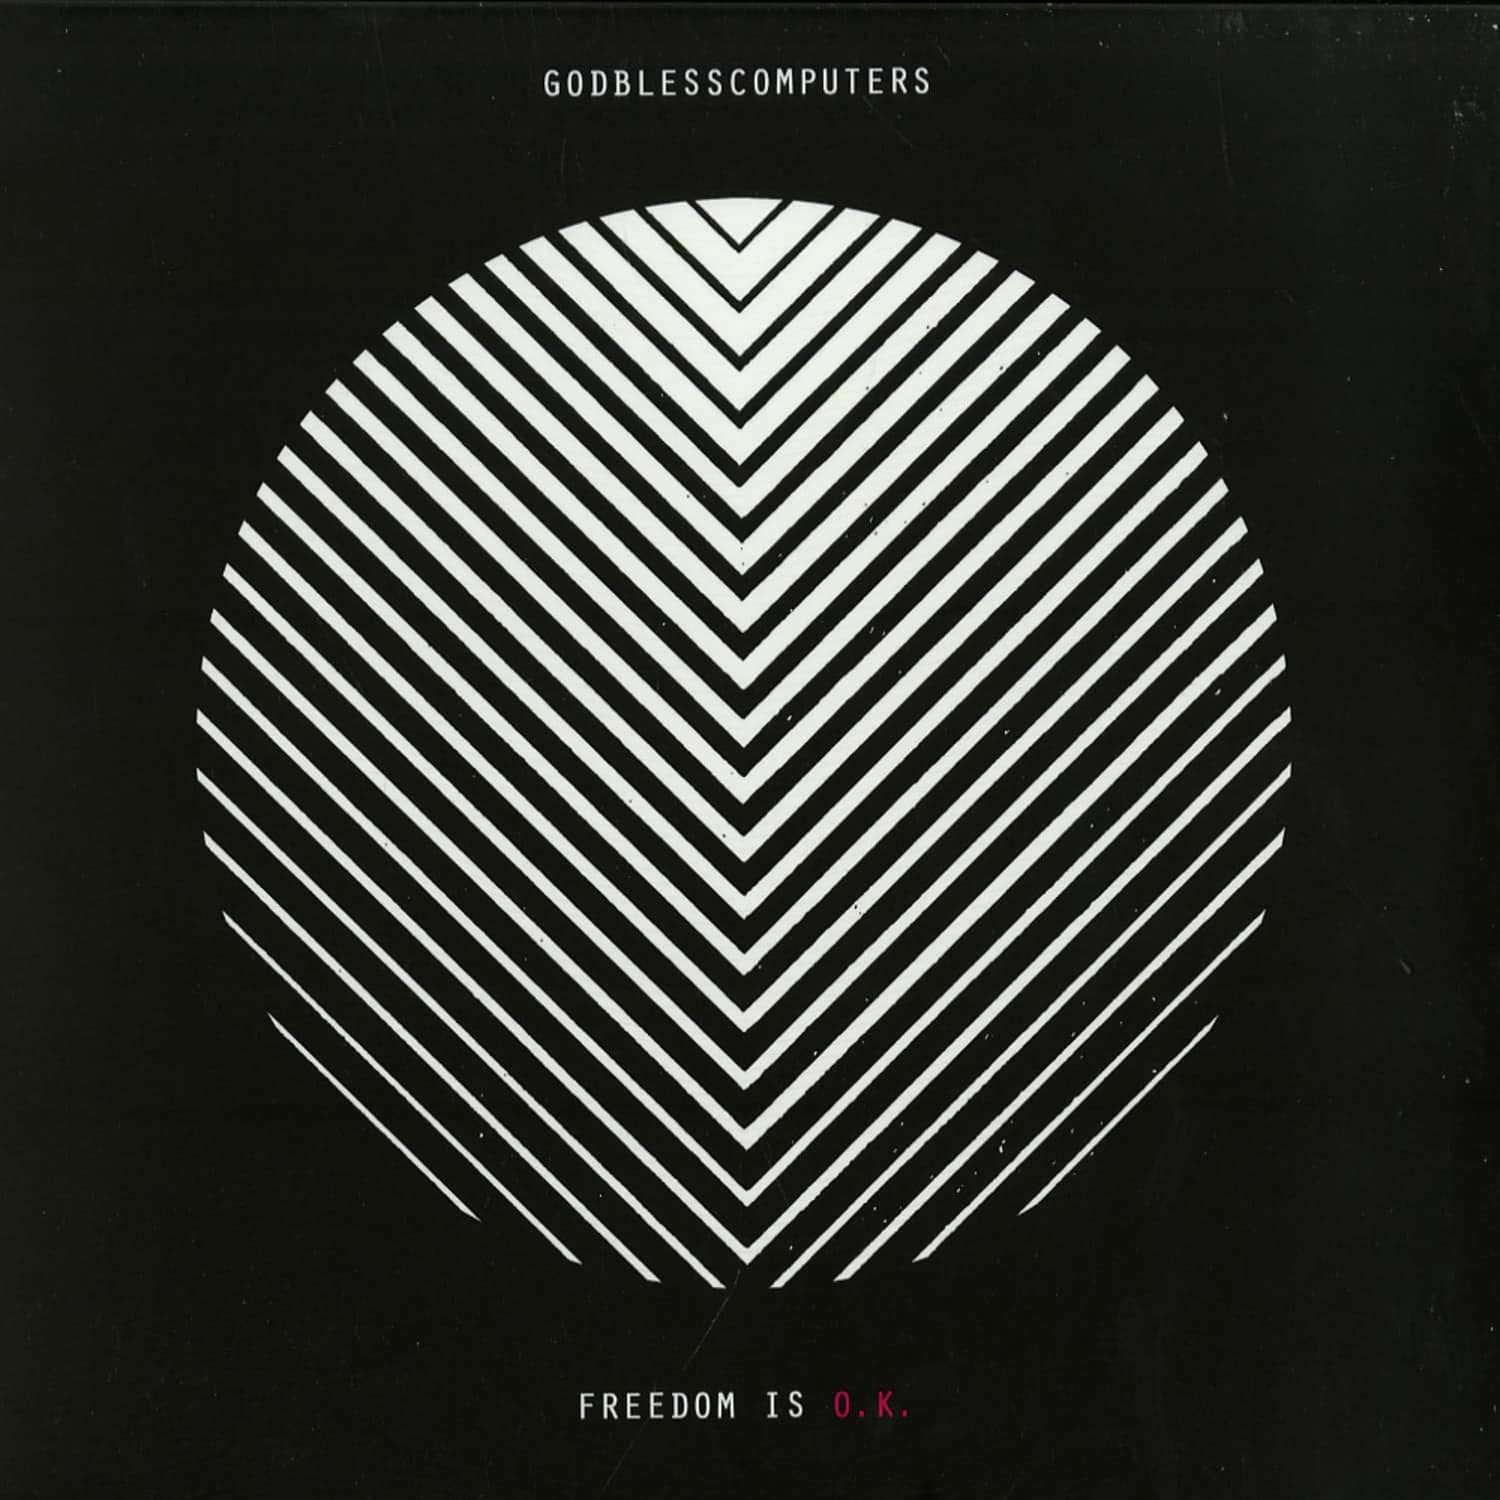 Godblesscomputer - FREEDOM IS O.K. 